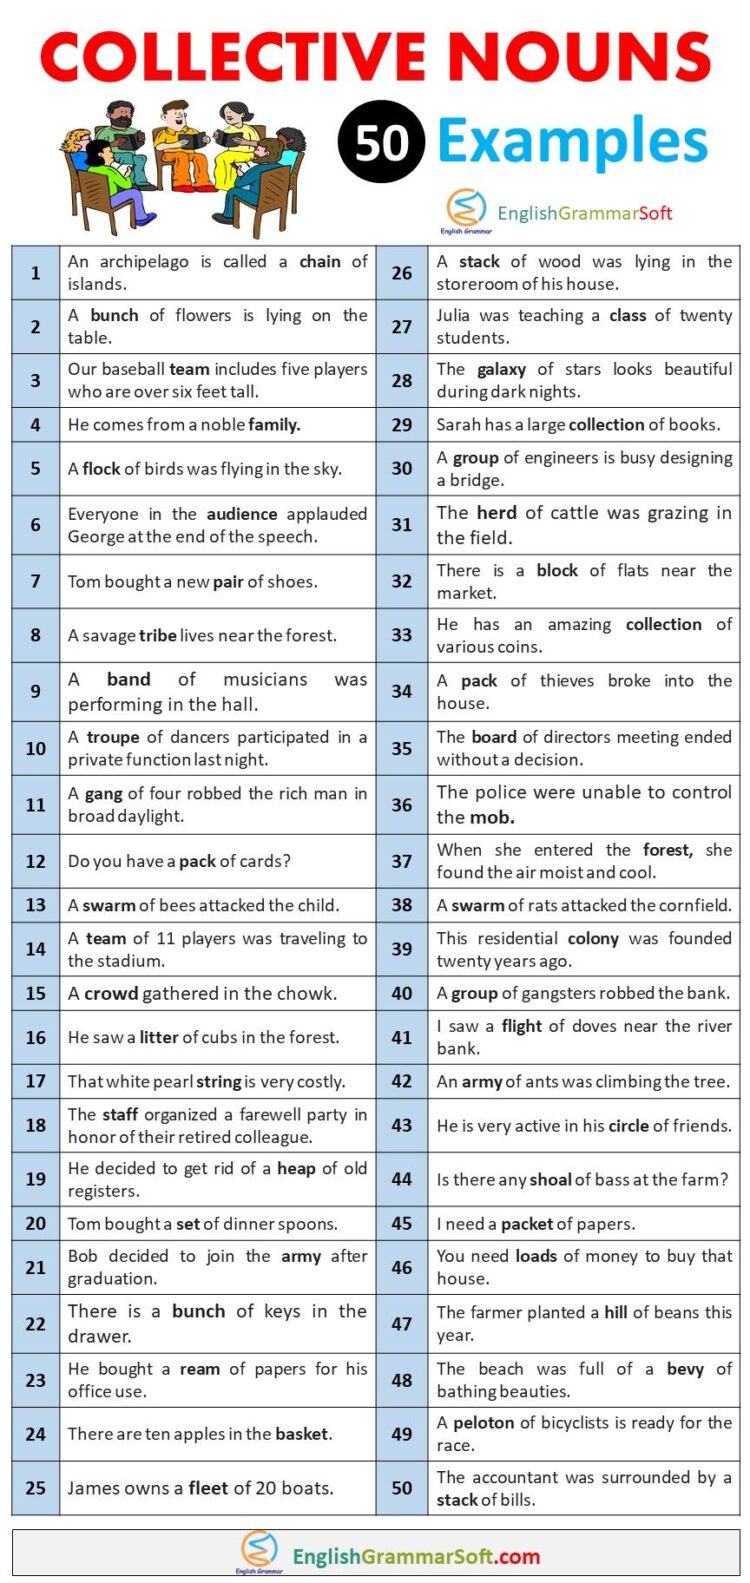 Collective Nouns Sentences (50 Examples) - Englishgrammarsoft